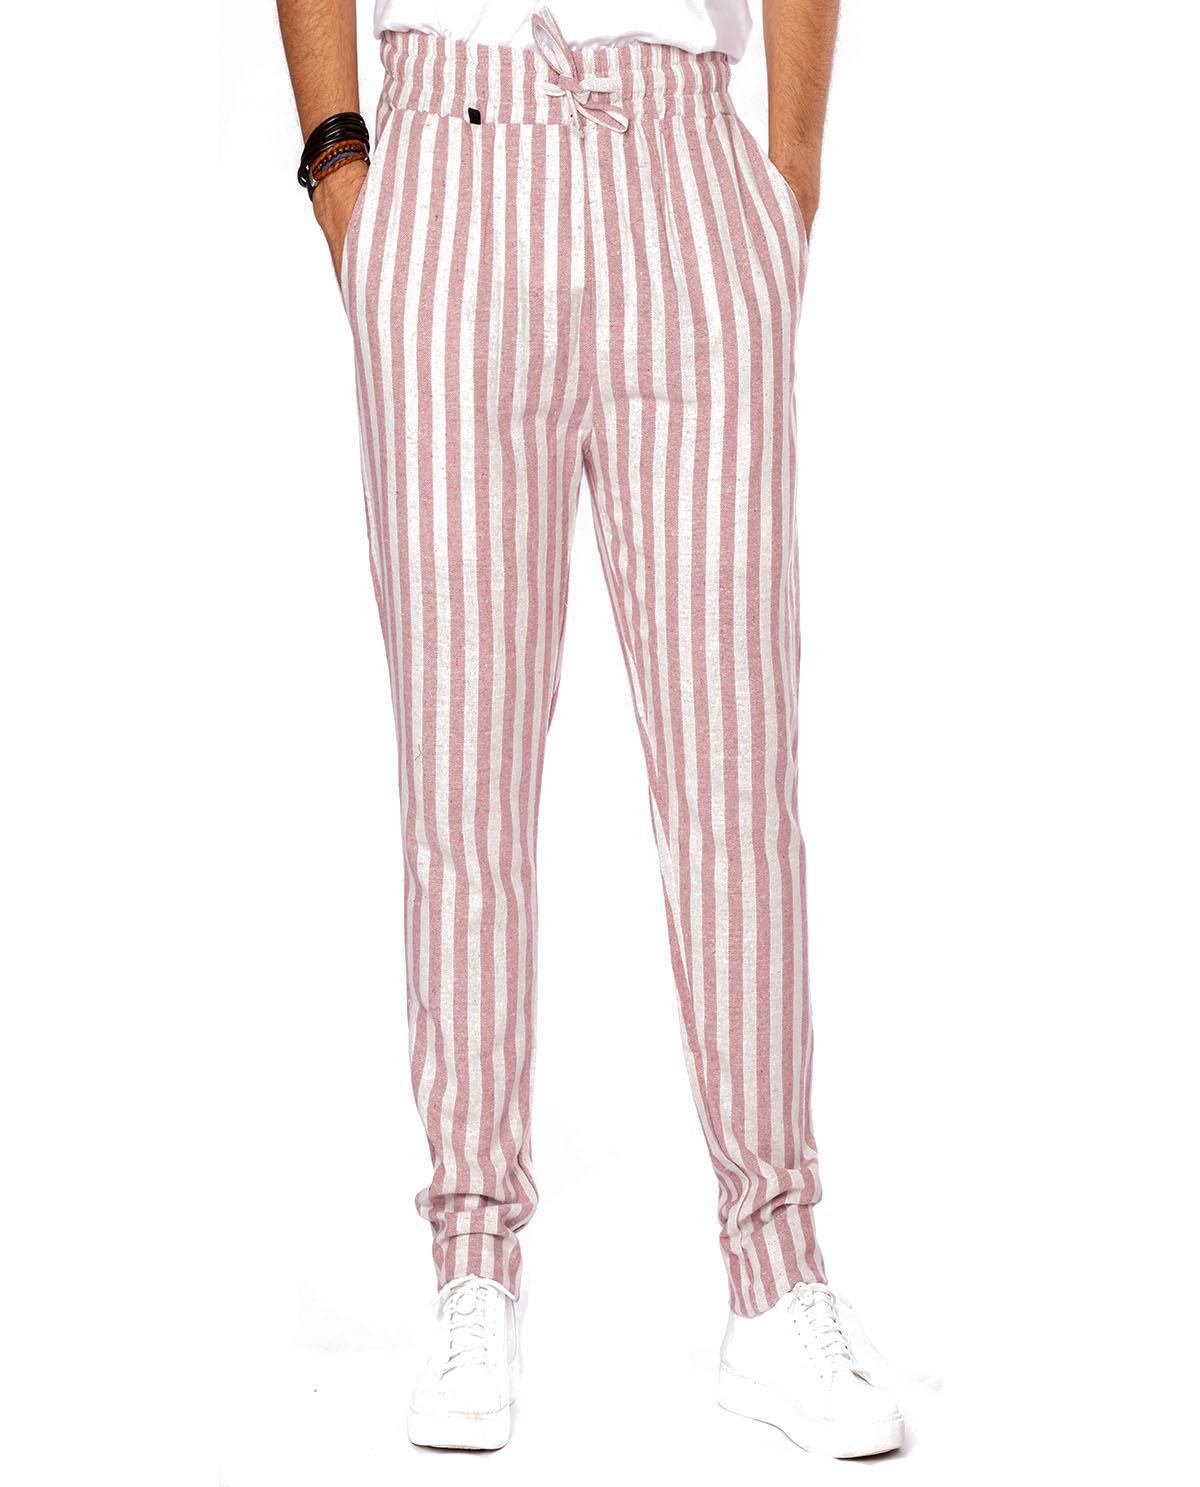 Pantalon rose corail à rayures blanches en lin